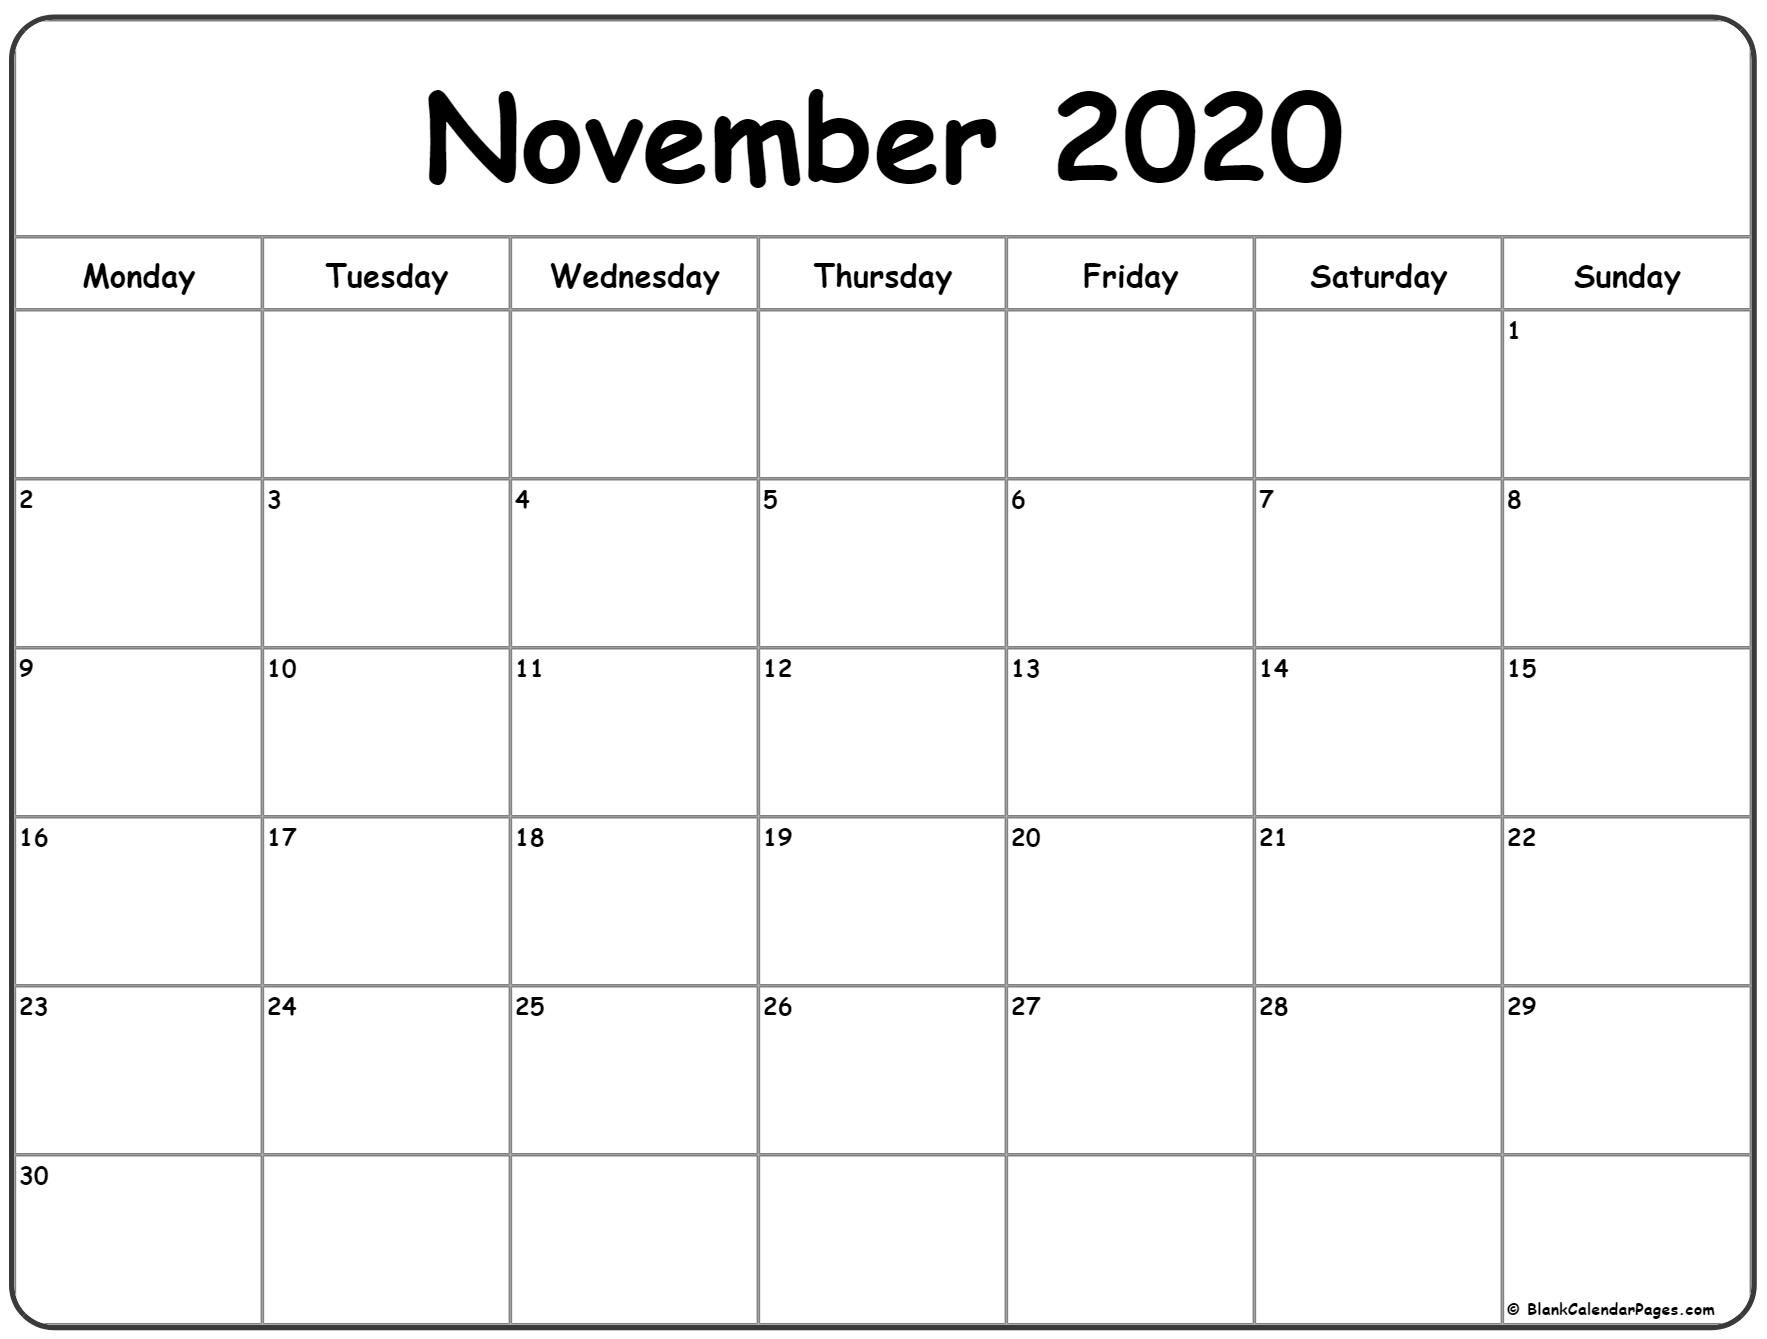 November 2020 Monday Calendar | Monday To Sunday In 2020